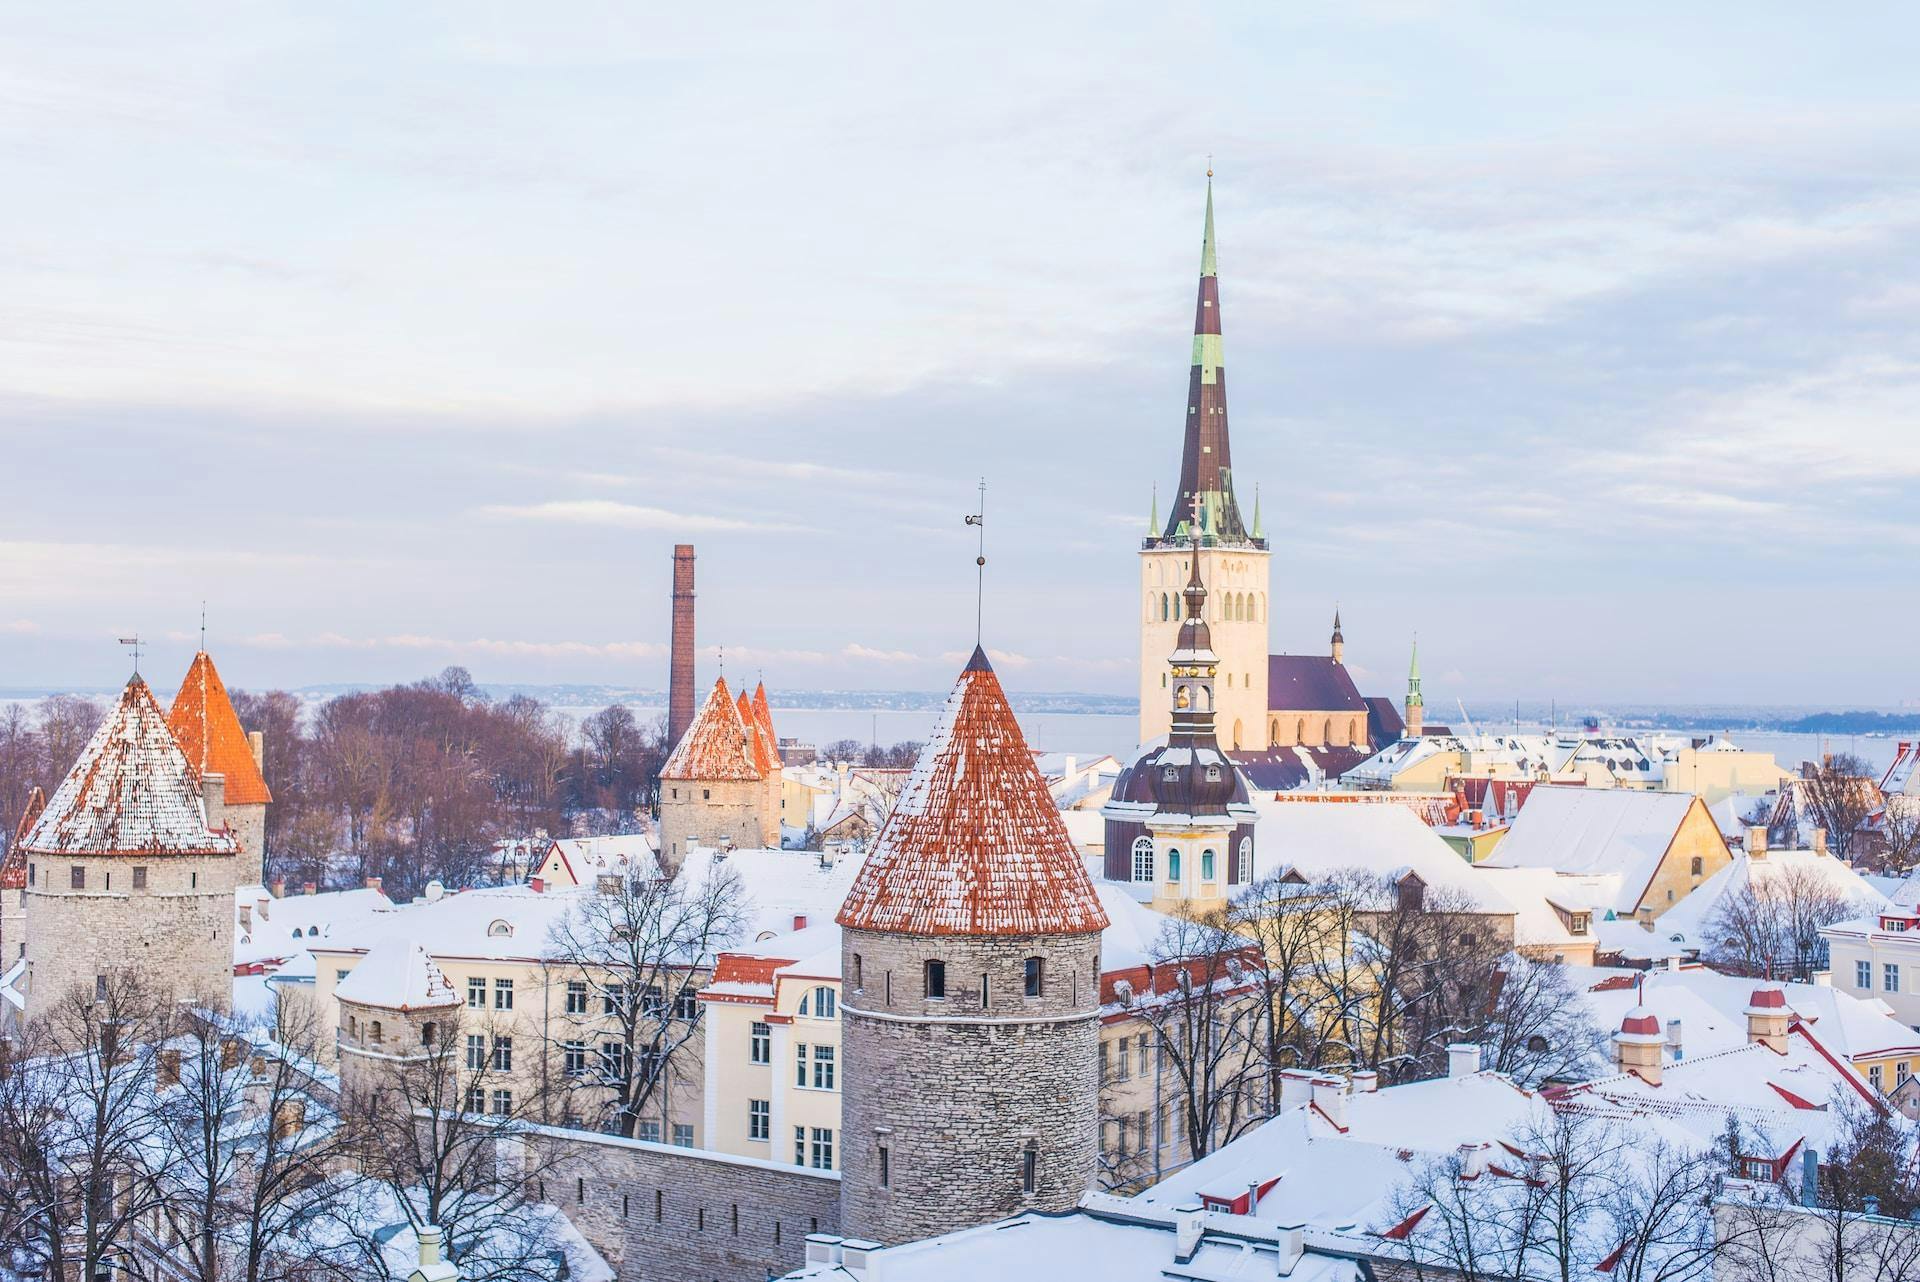 Tallinn during the winter